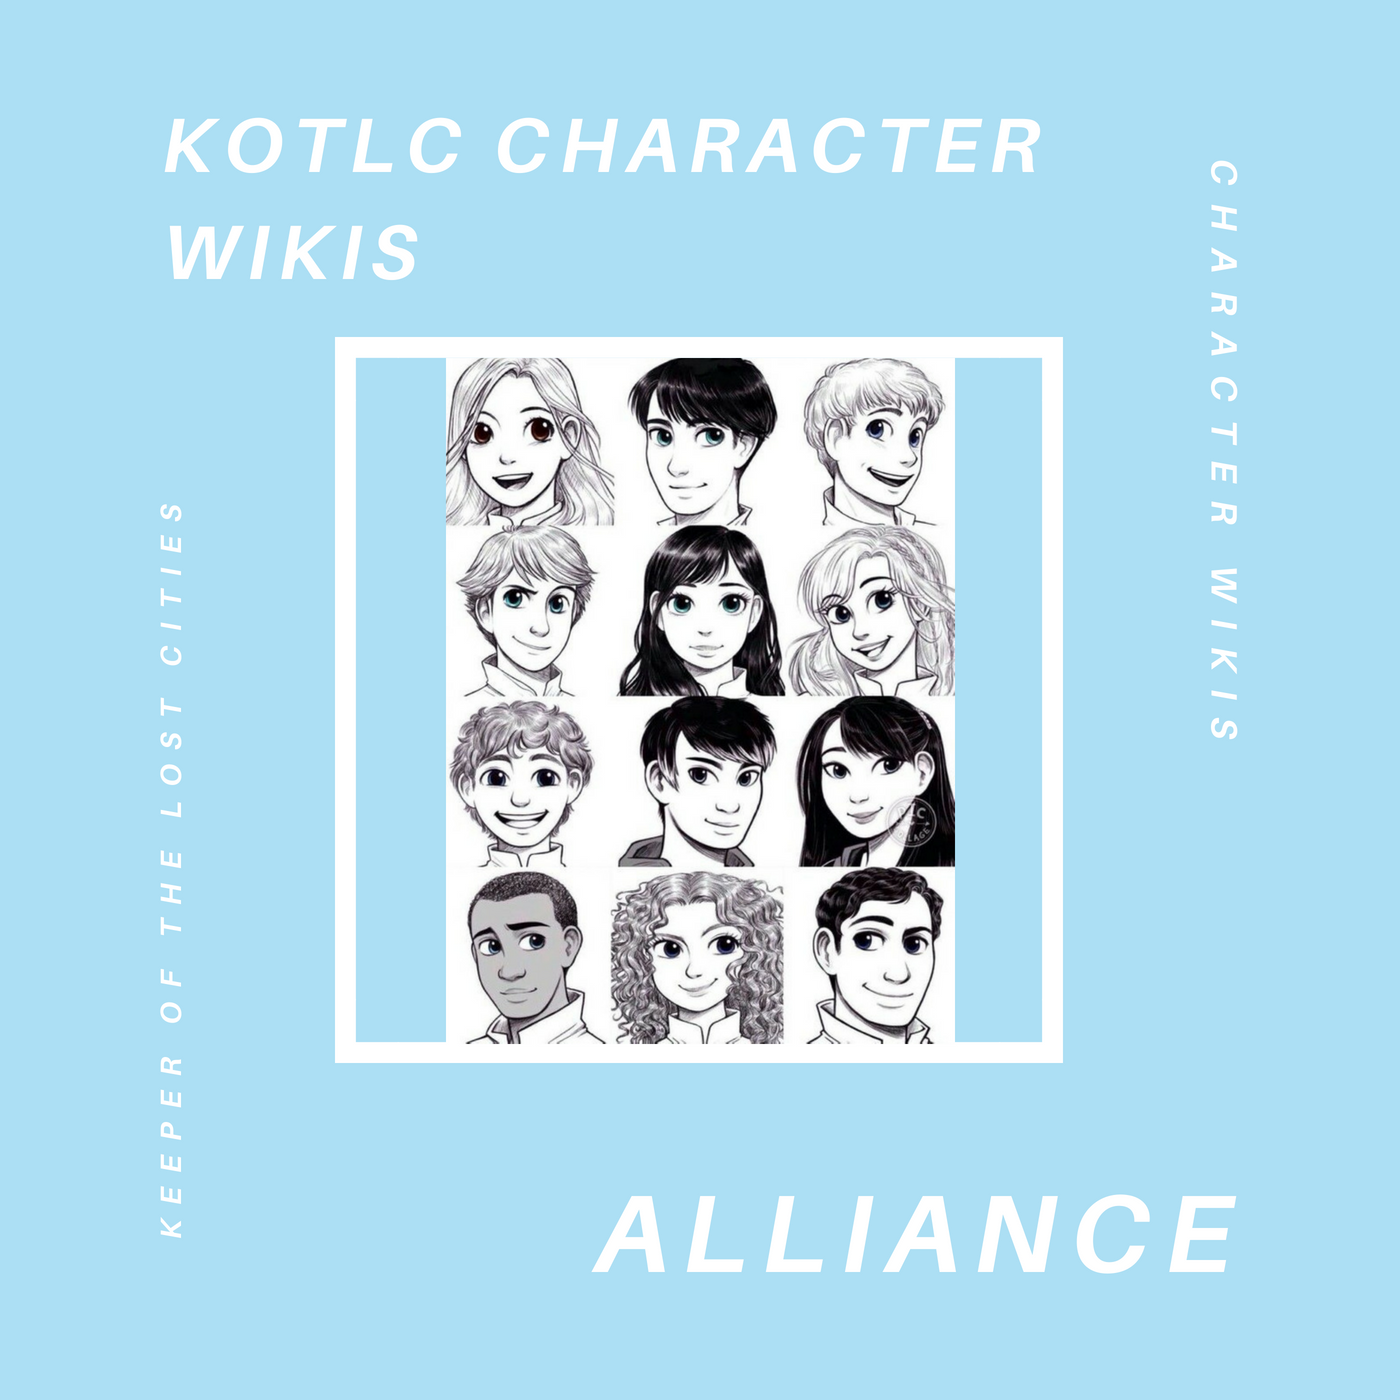 KotLC Character Wikis Alliance. Keefe Sencen Idolization